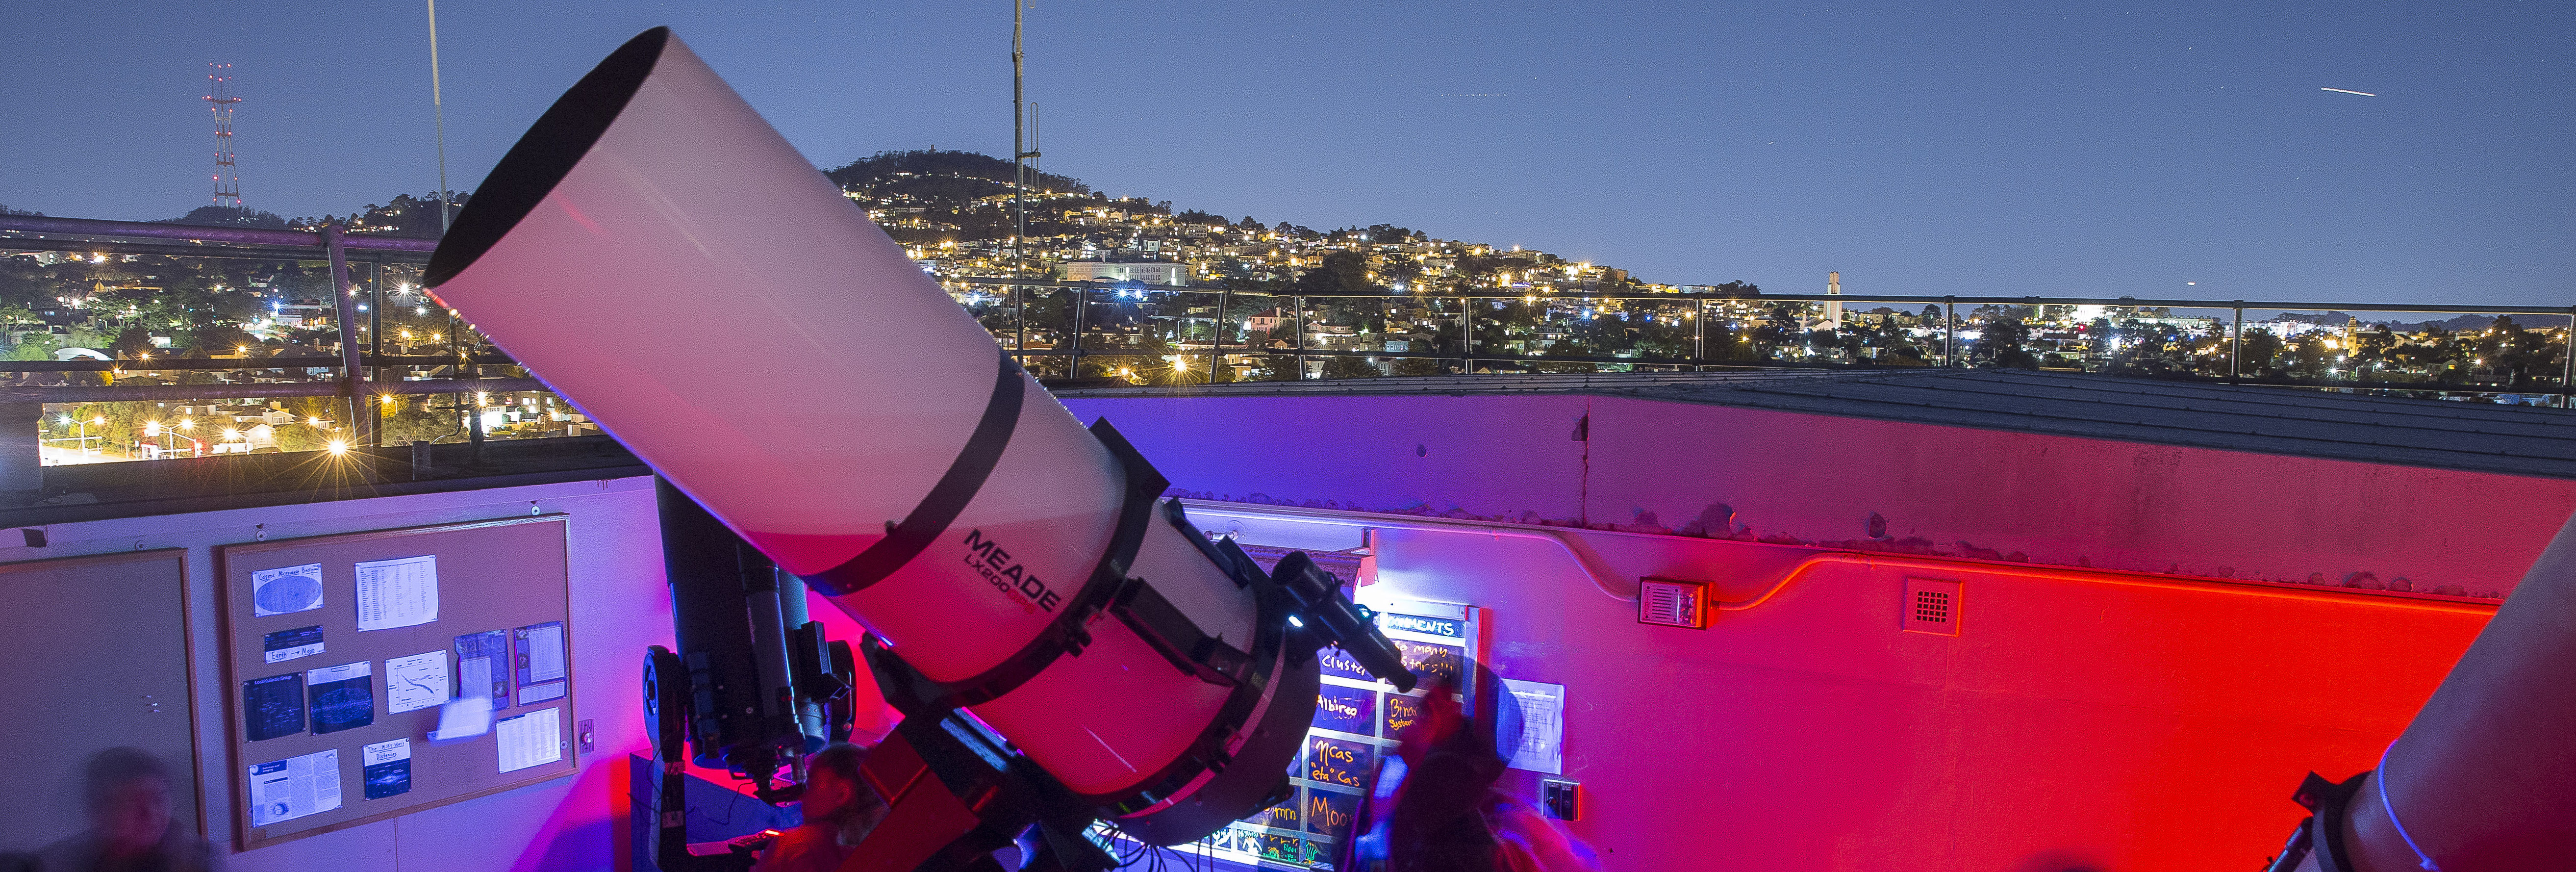 SFSU observatory telescope 